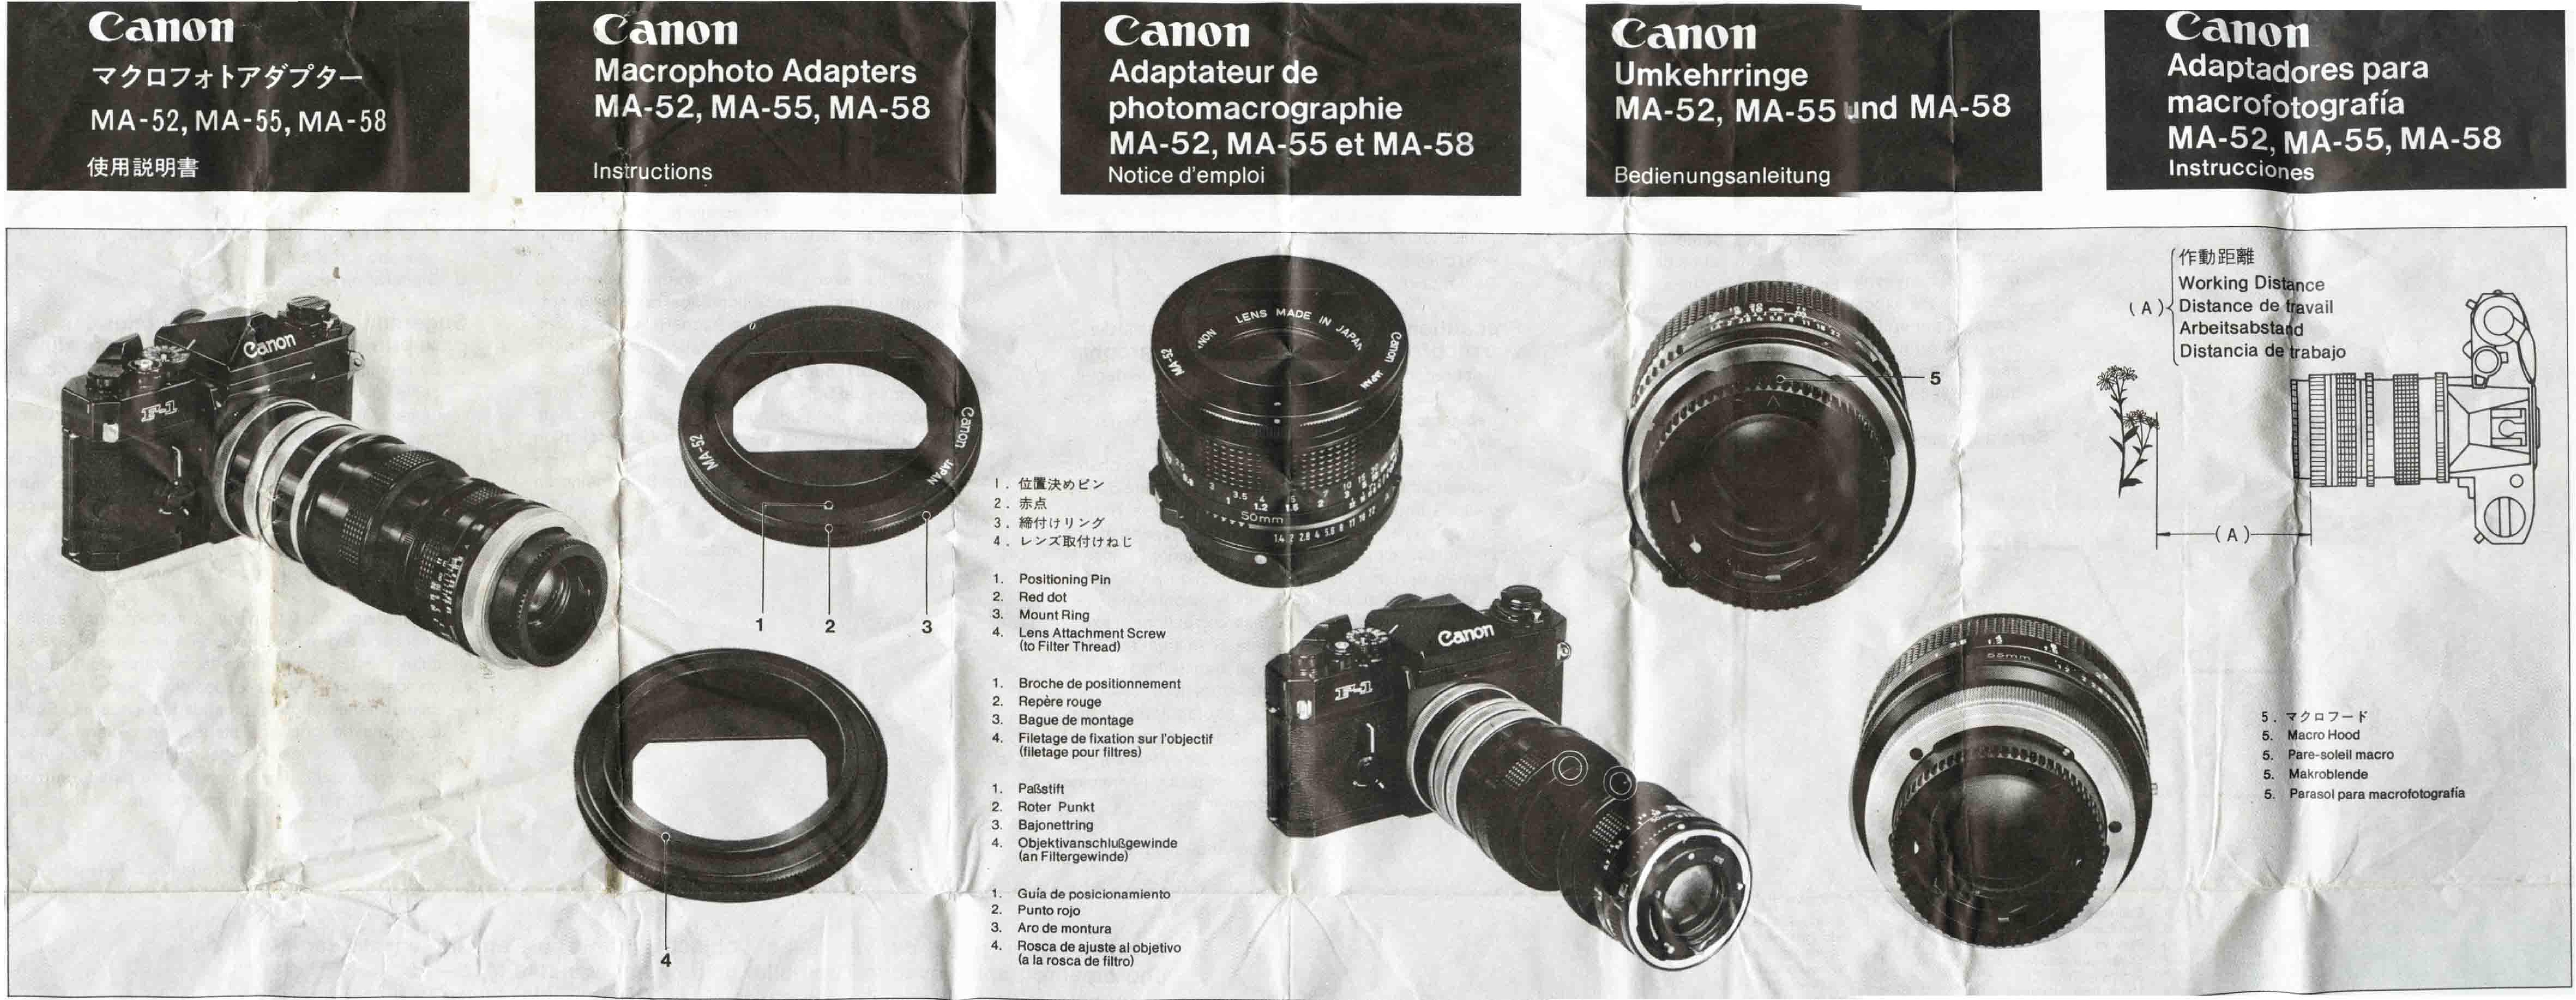 Canon MA-55 Network Card User Manual